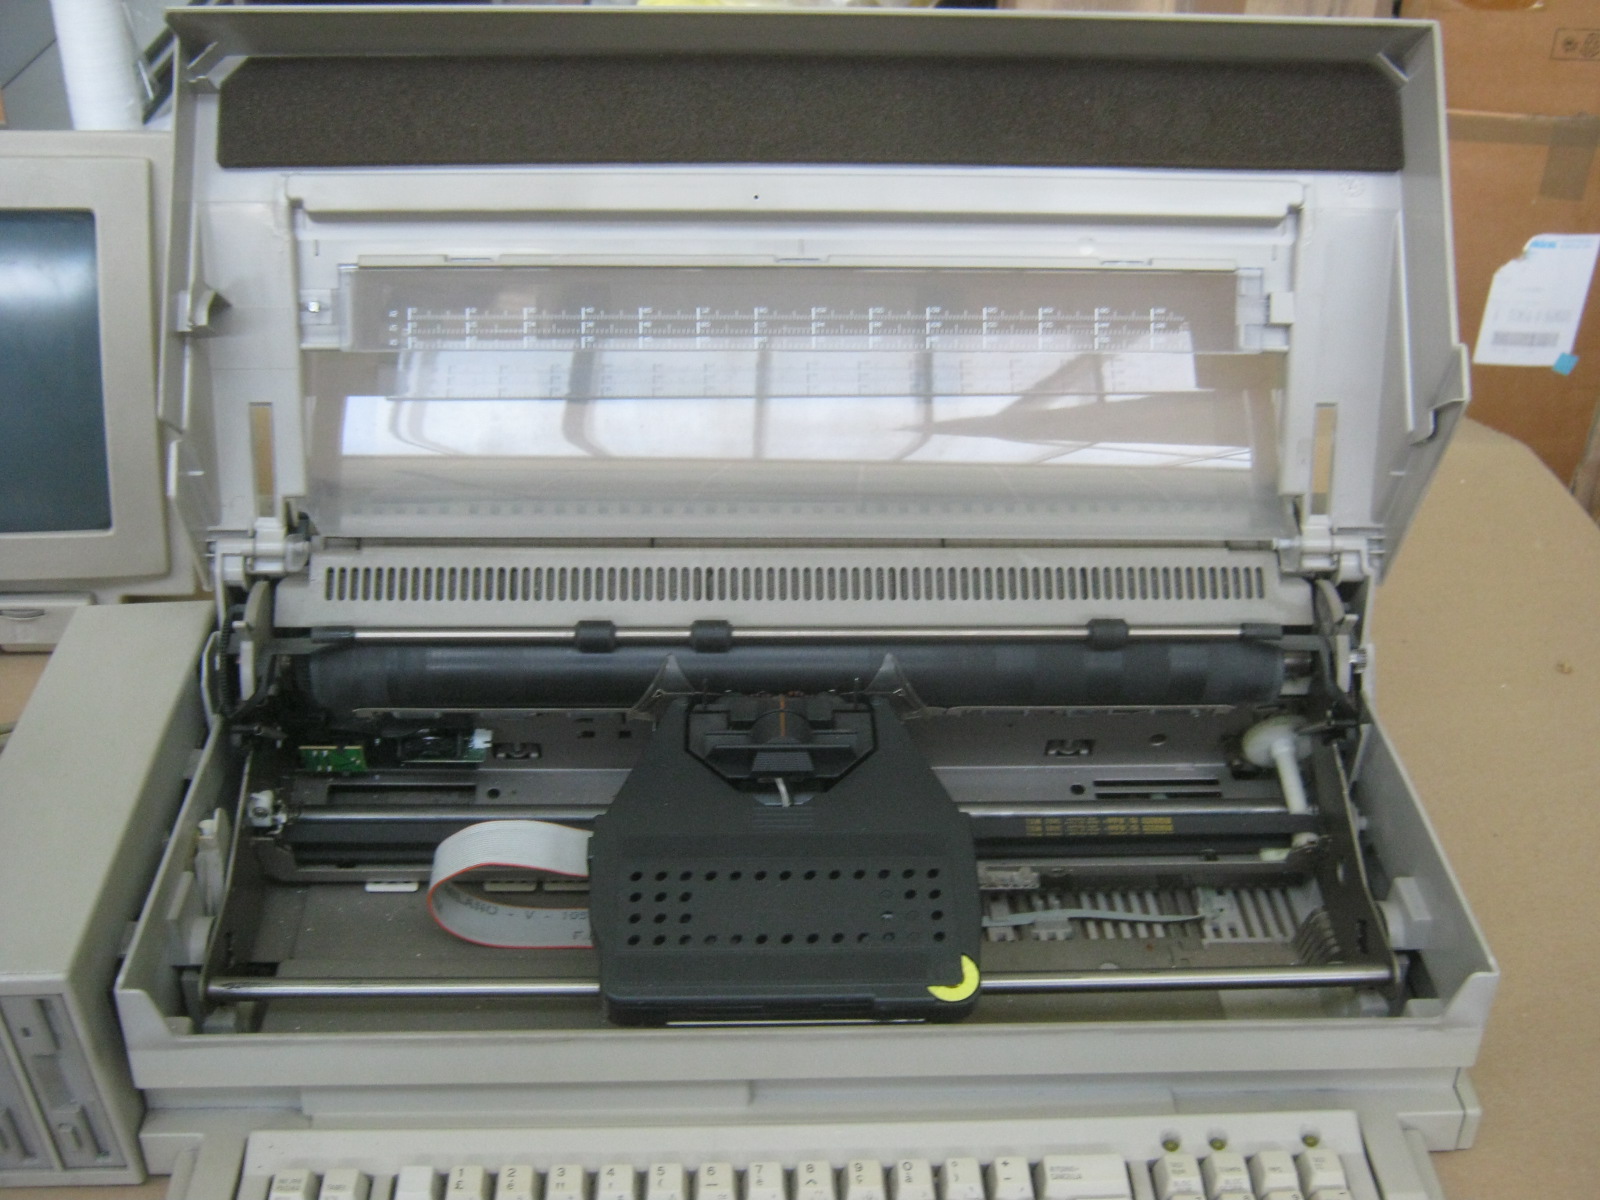 http://museodelcomputer.org/parts/olivetti/typewriters/etv2700/IMG_6852.JPG